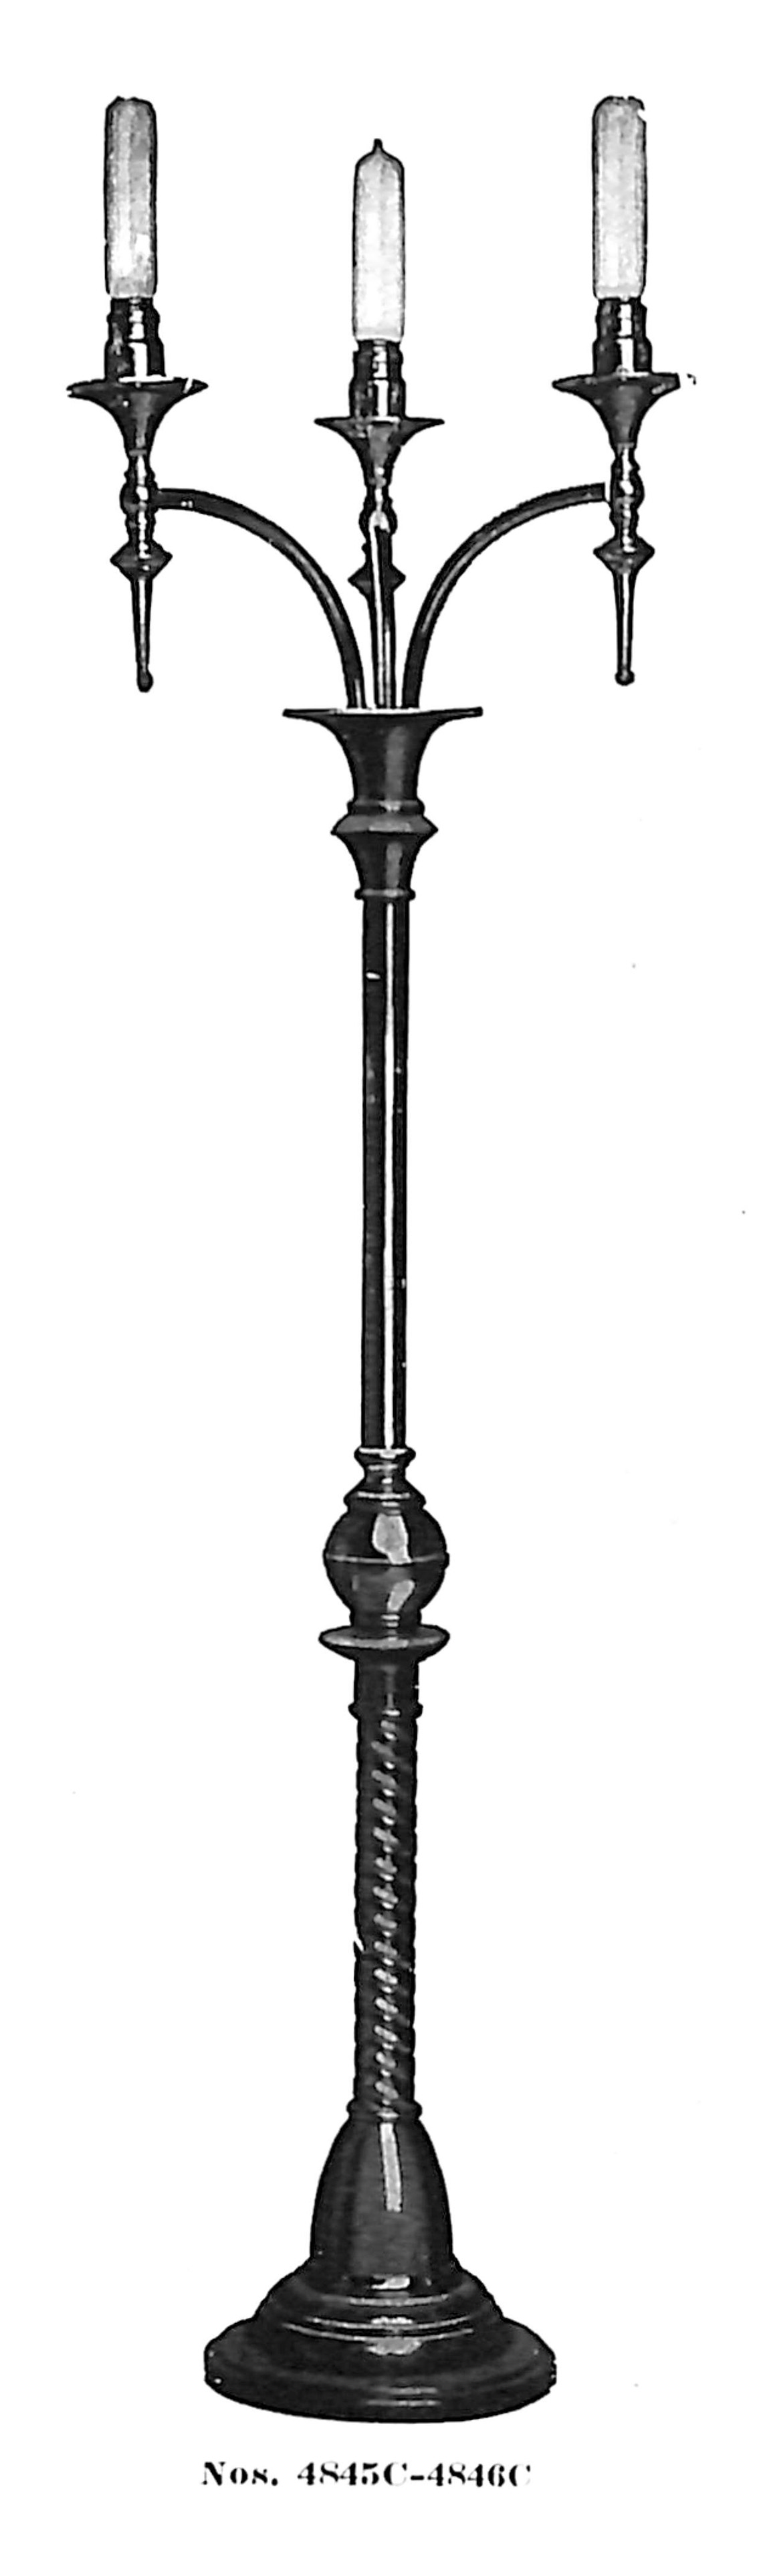 Candlesticks no. 4854C-4846C